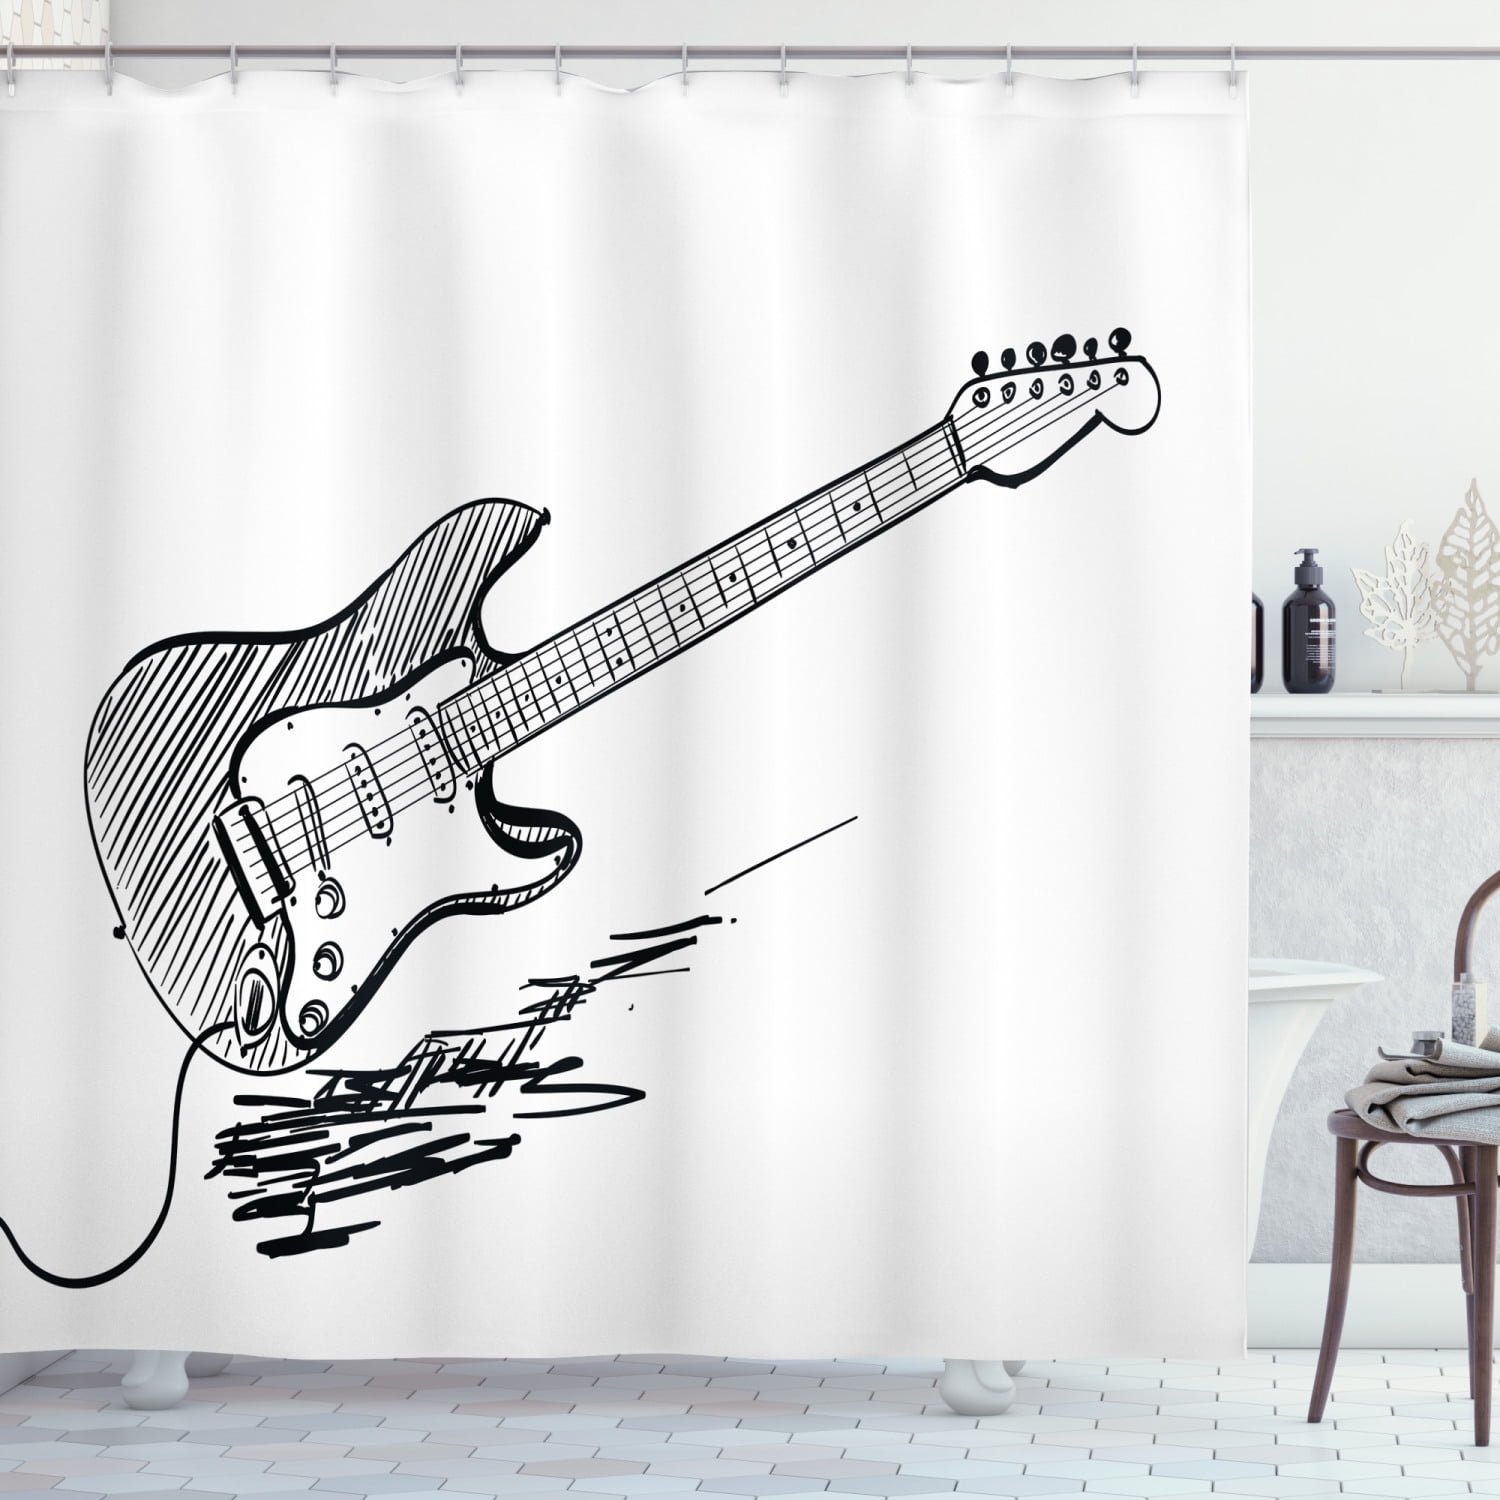 Guitar and beach Shower Curtain Bathroom Decor Waterproof Fabric & 12Hooks new 